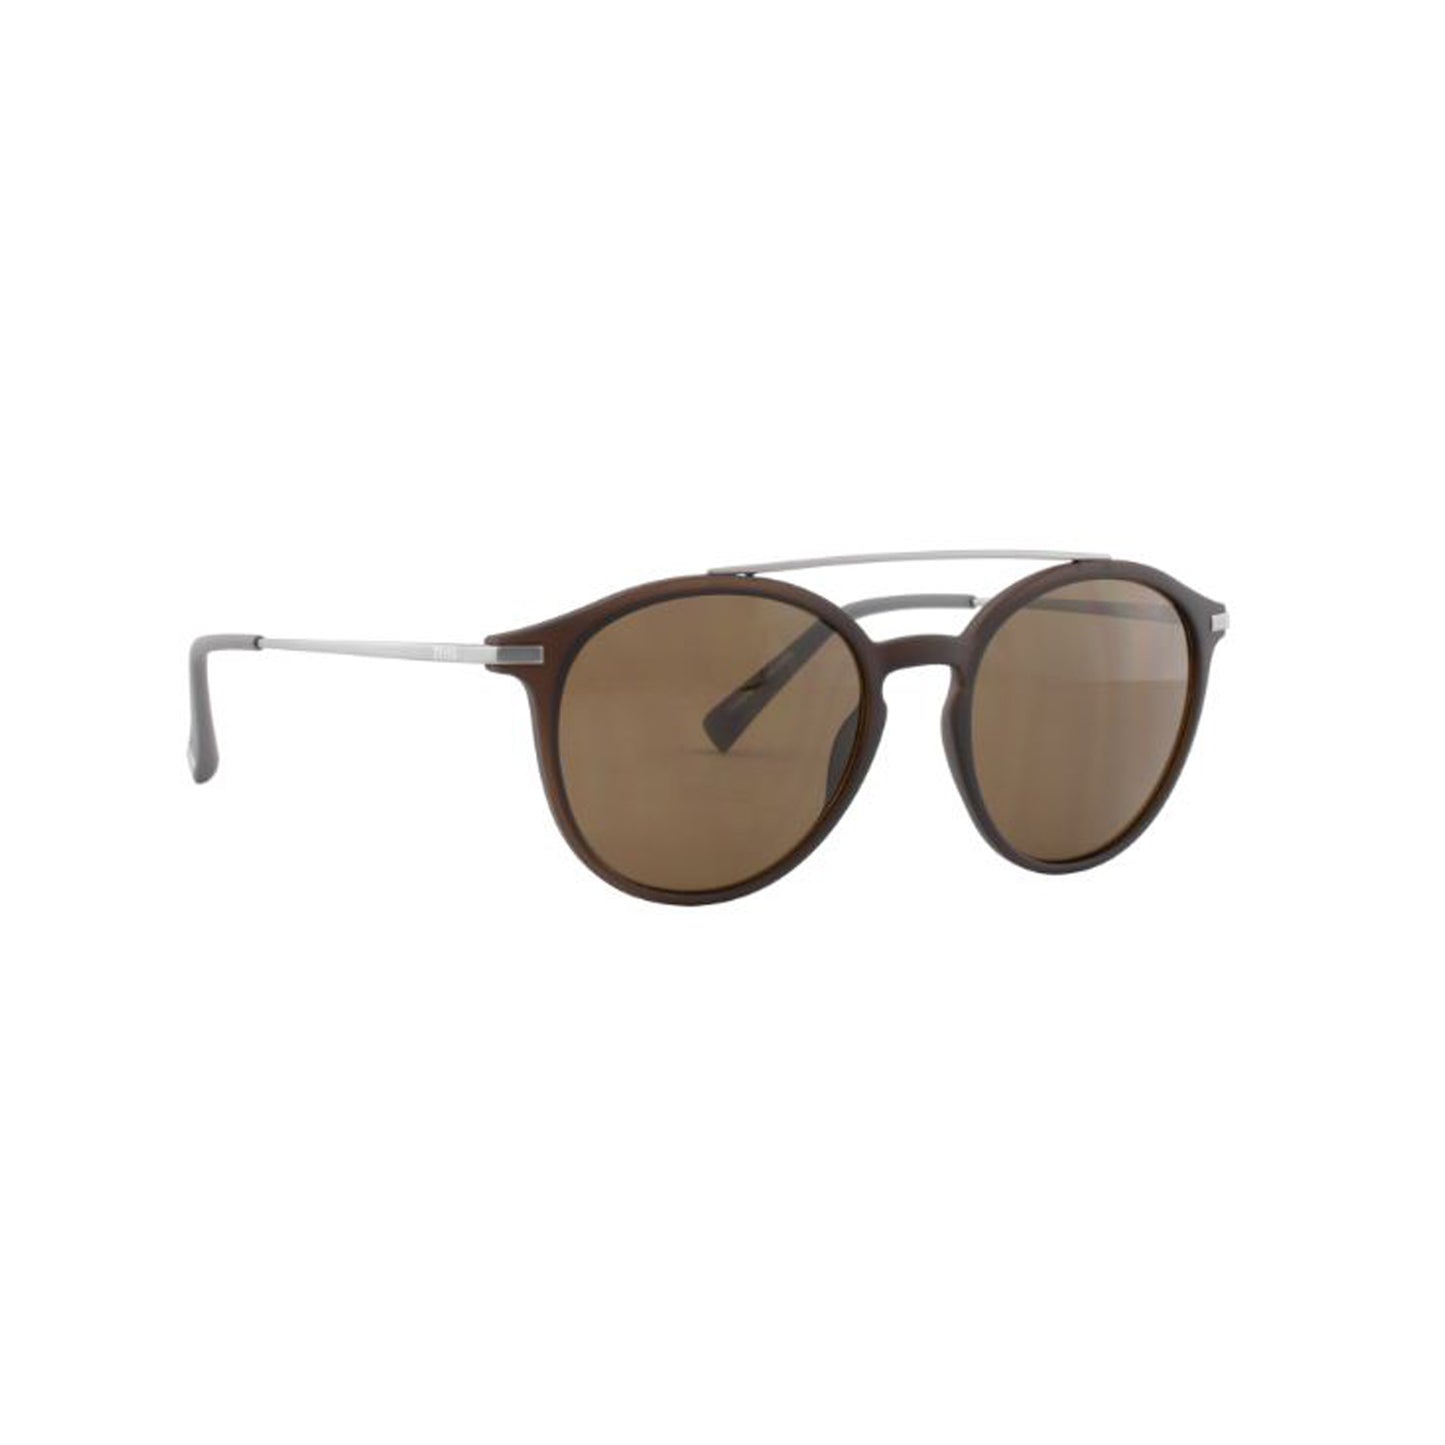 Zeiss Eyewear Brown Aviator Acetate Full Rim Sunglasses. Made in Germany ZS91004-Y22